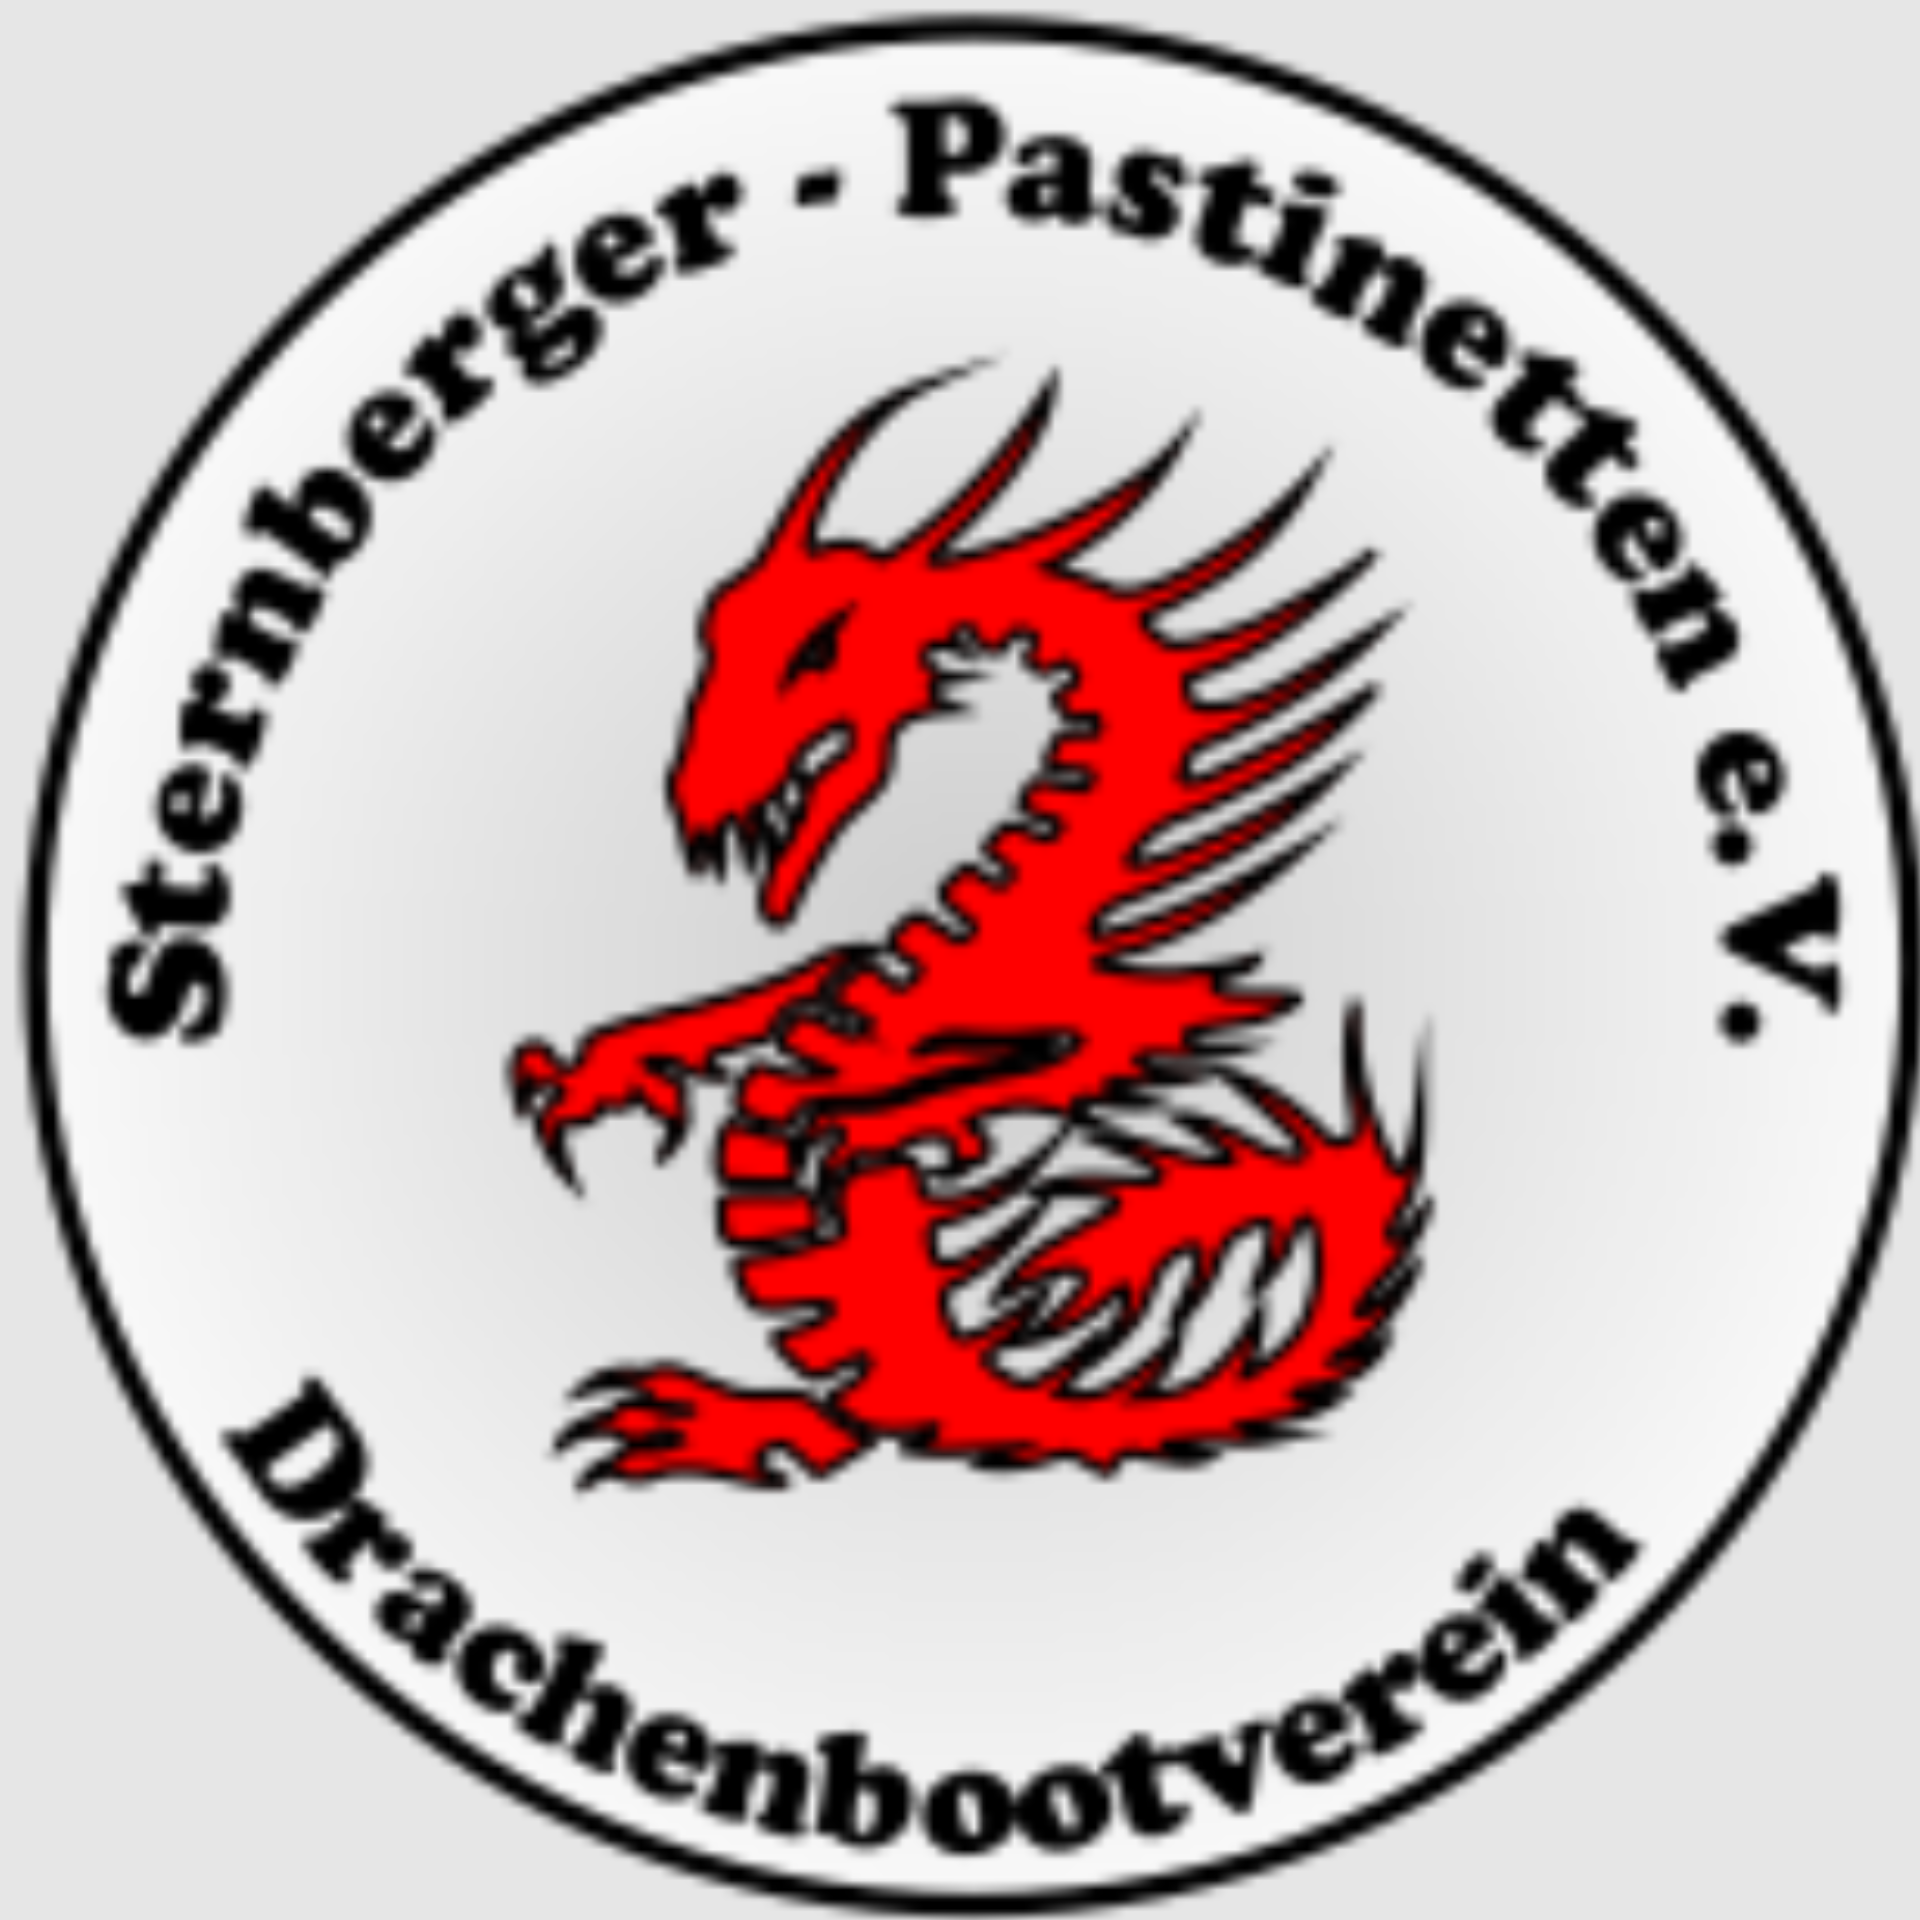 Sternberger Pastinetten